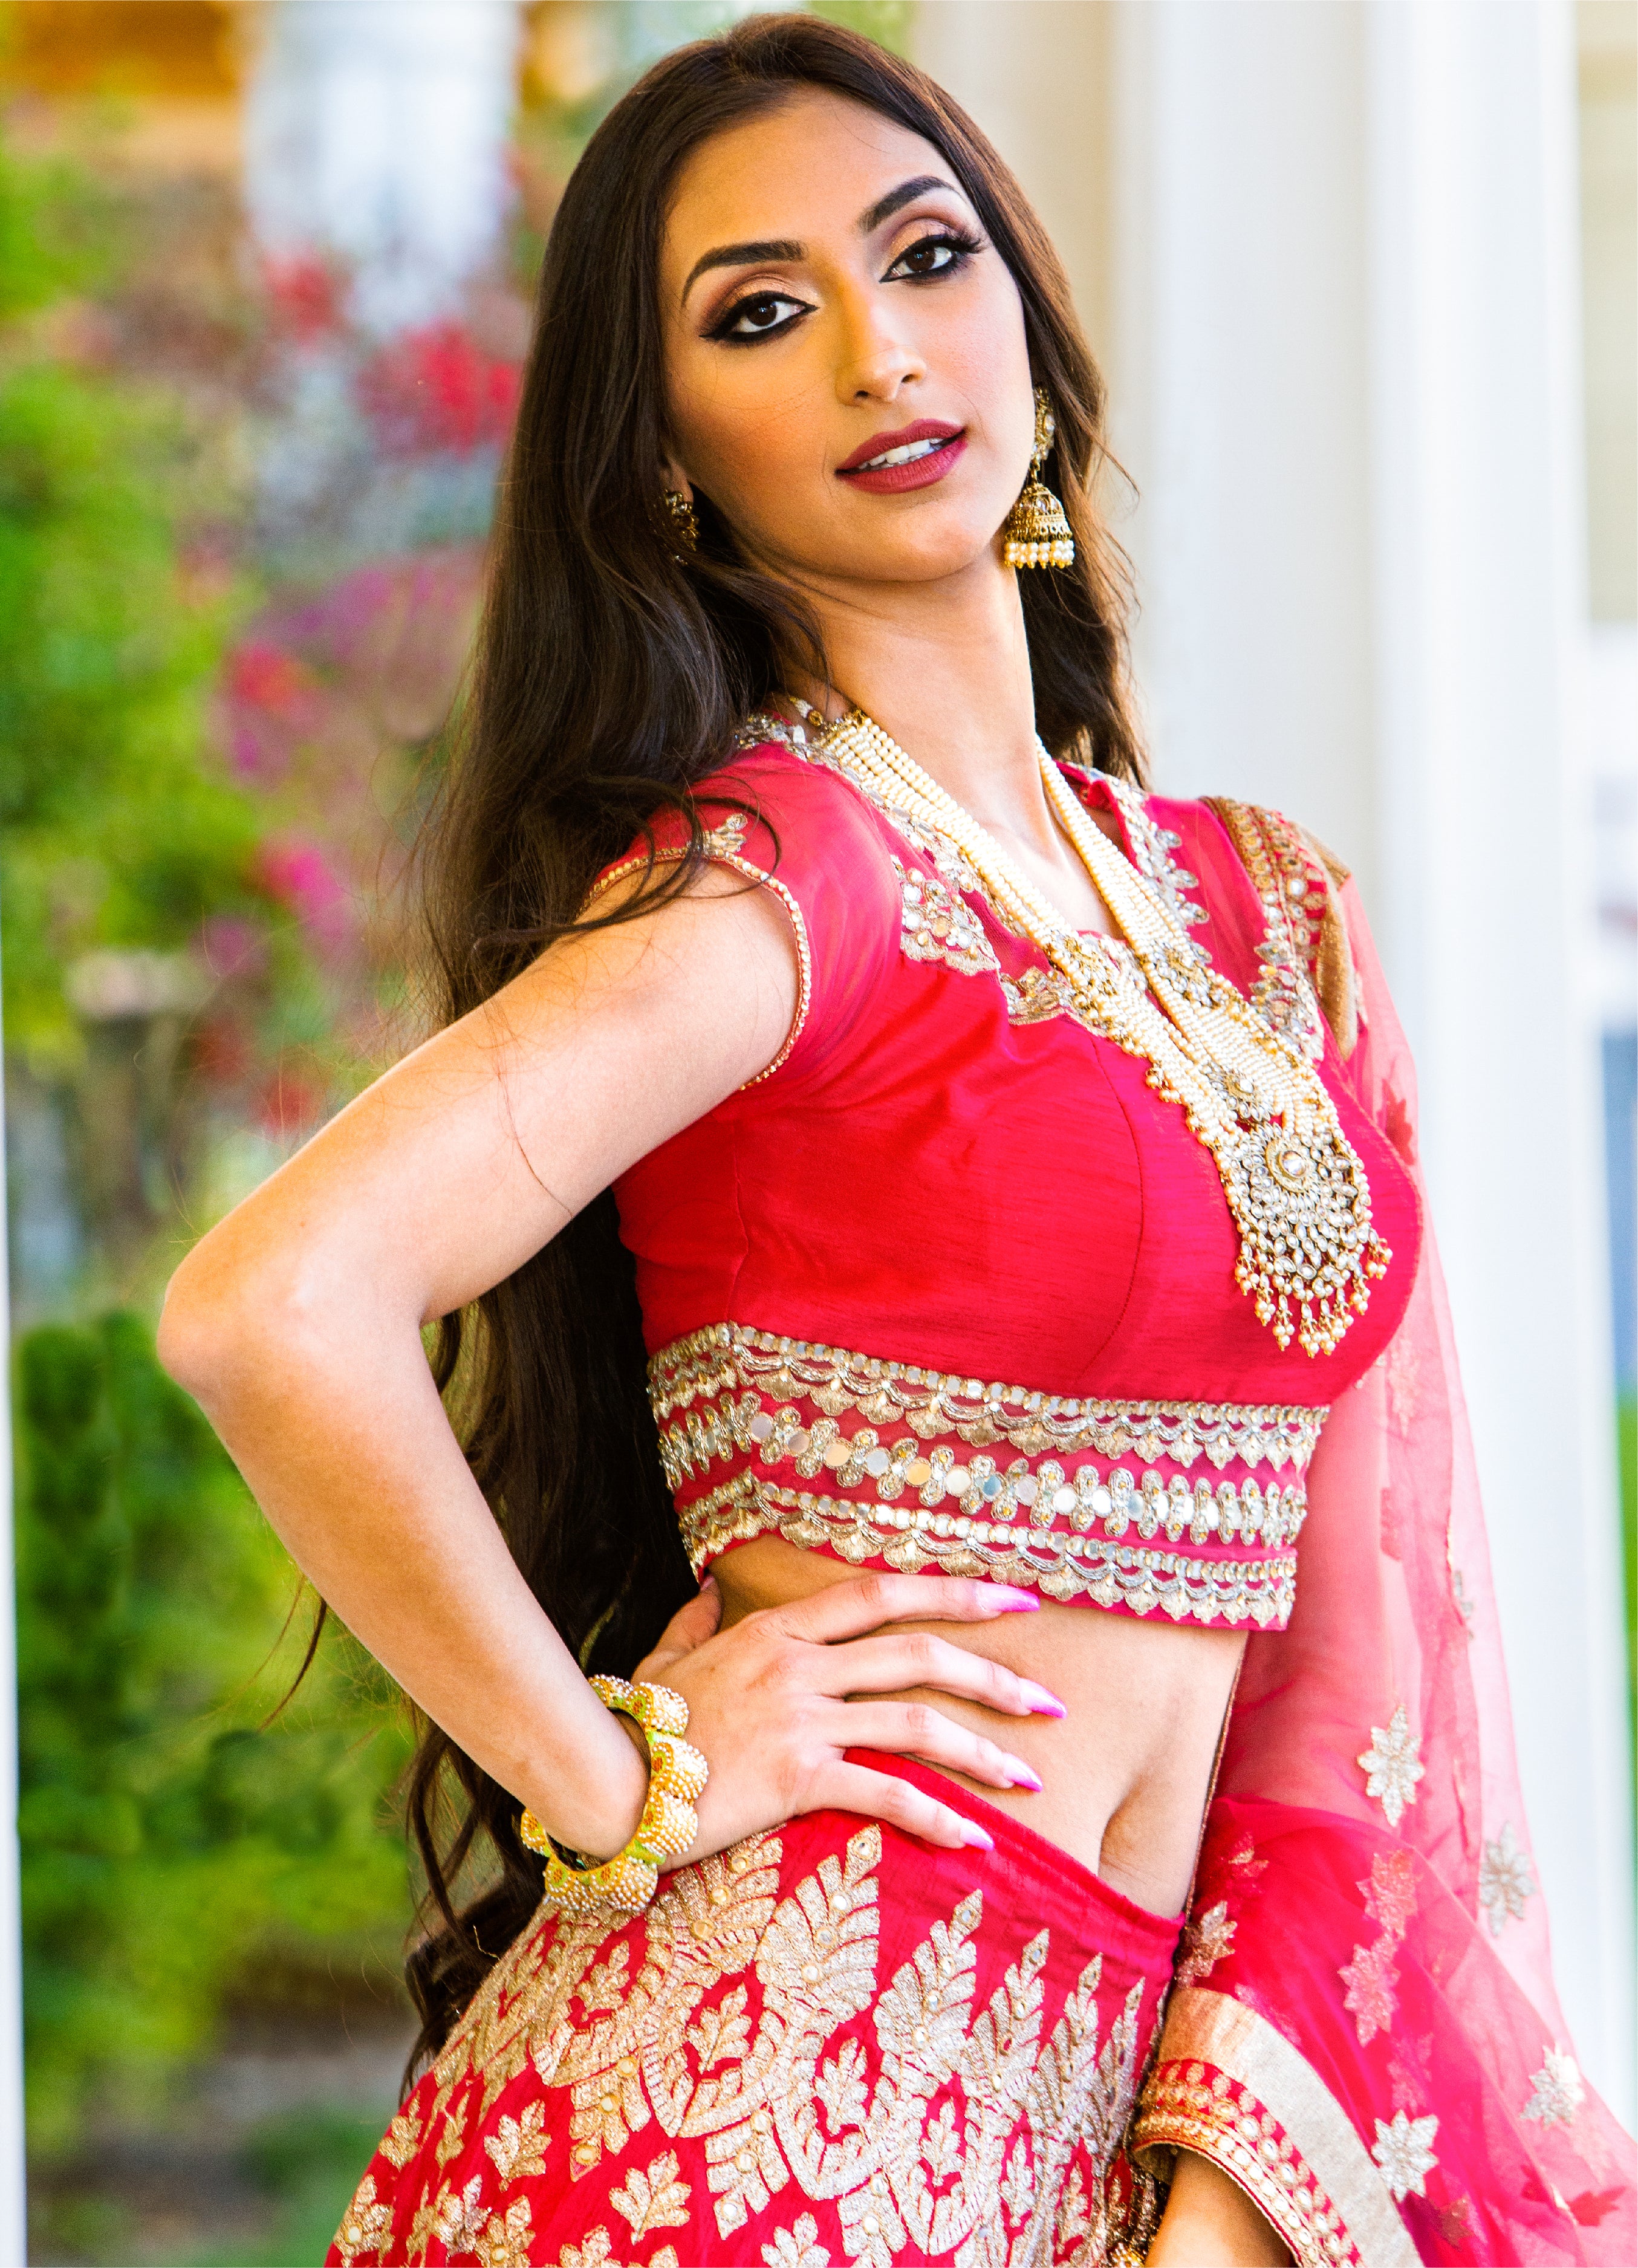 Prachi Bansal: Wearing Sita's wedding outfit was quite challenging